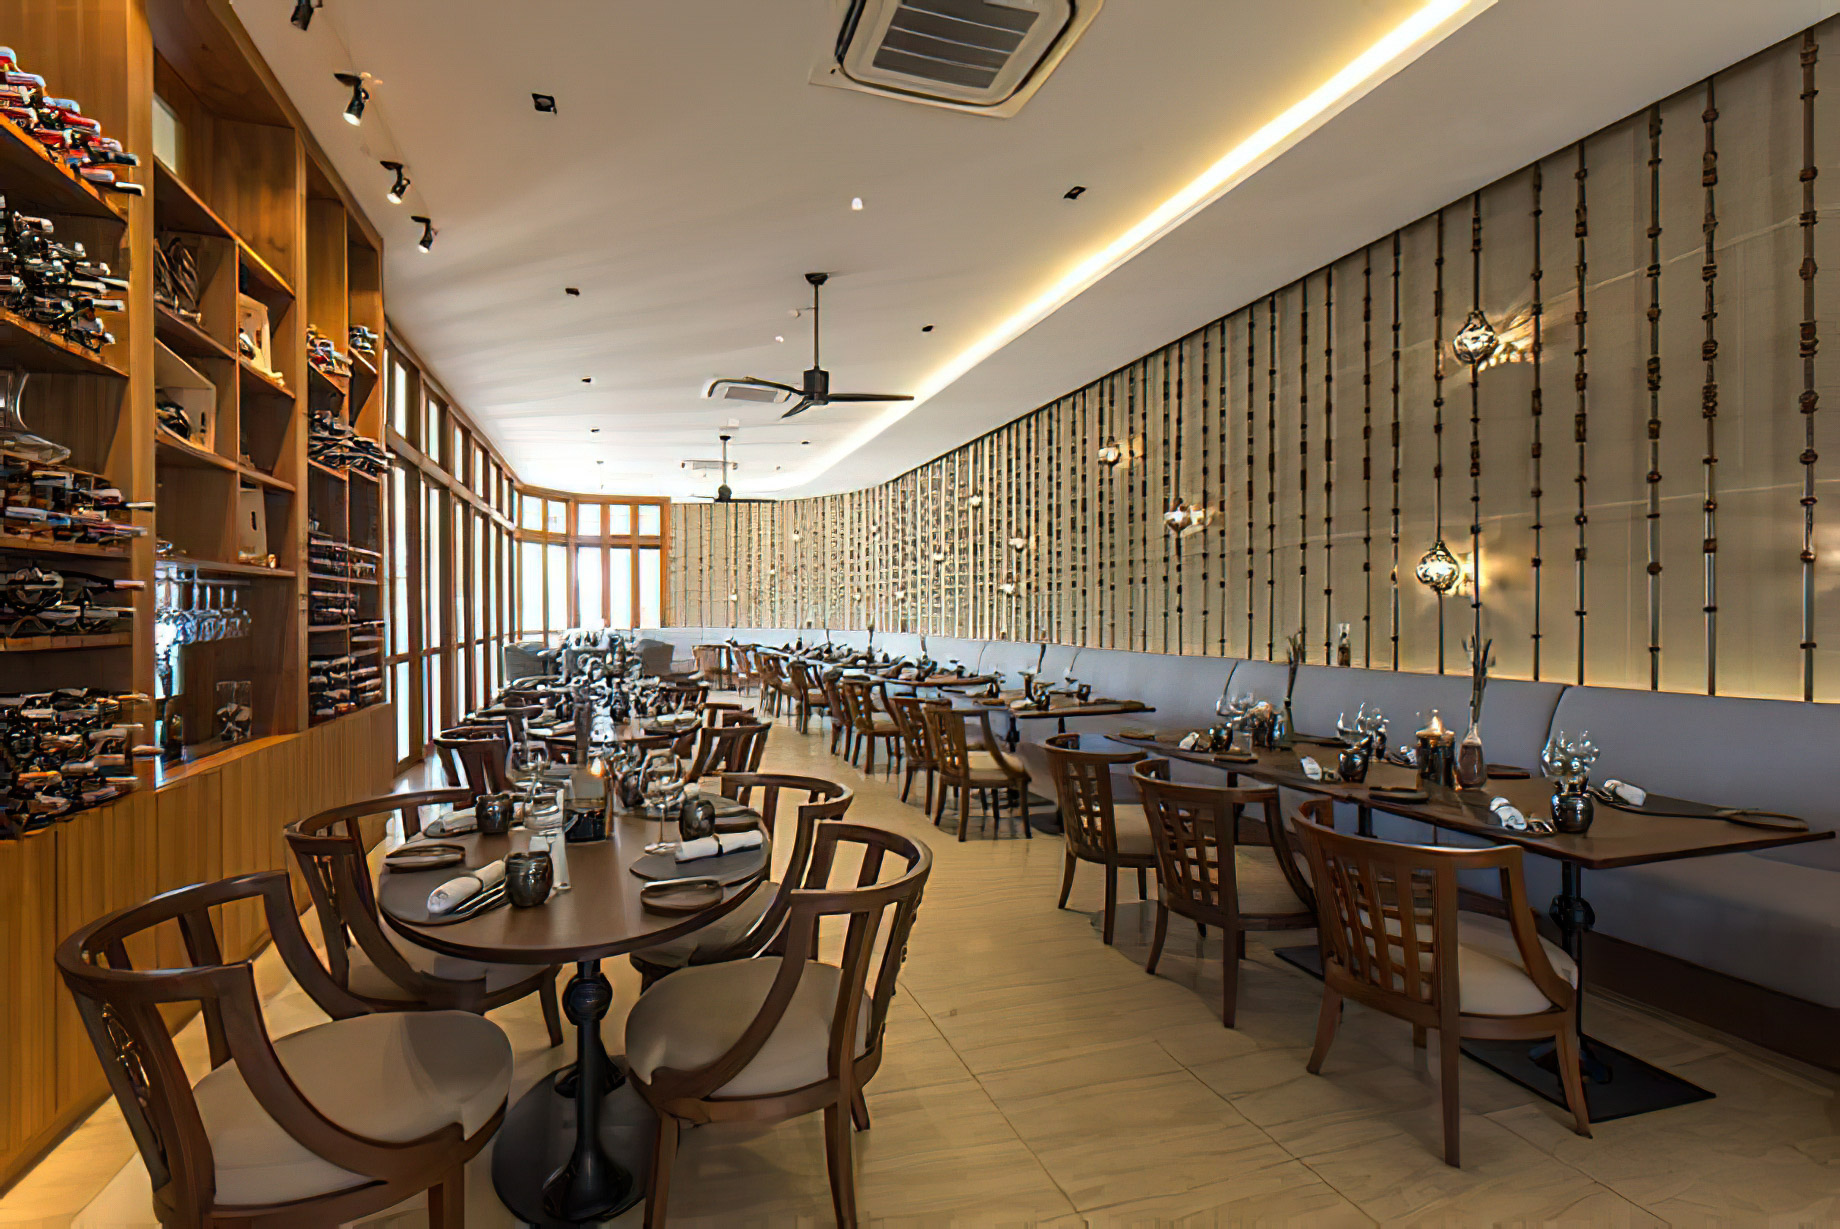 The Ritz-Carlton, Koh Samui Resort - Surat Thani, Thailand - The Ranch Steakhouse at Shook